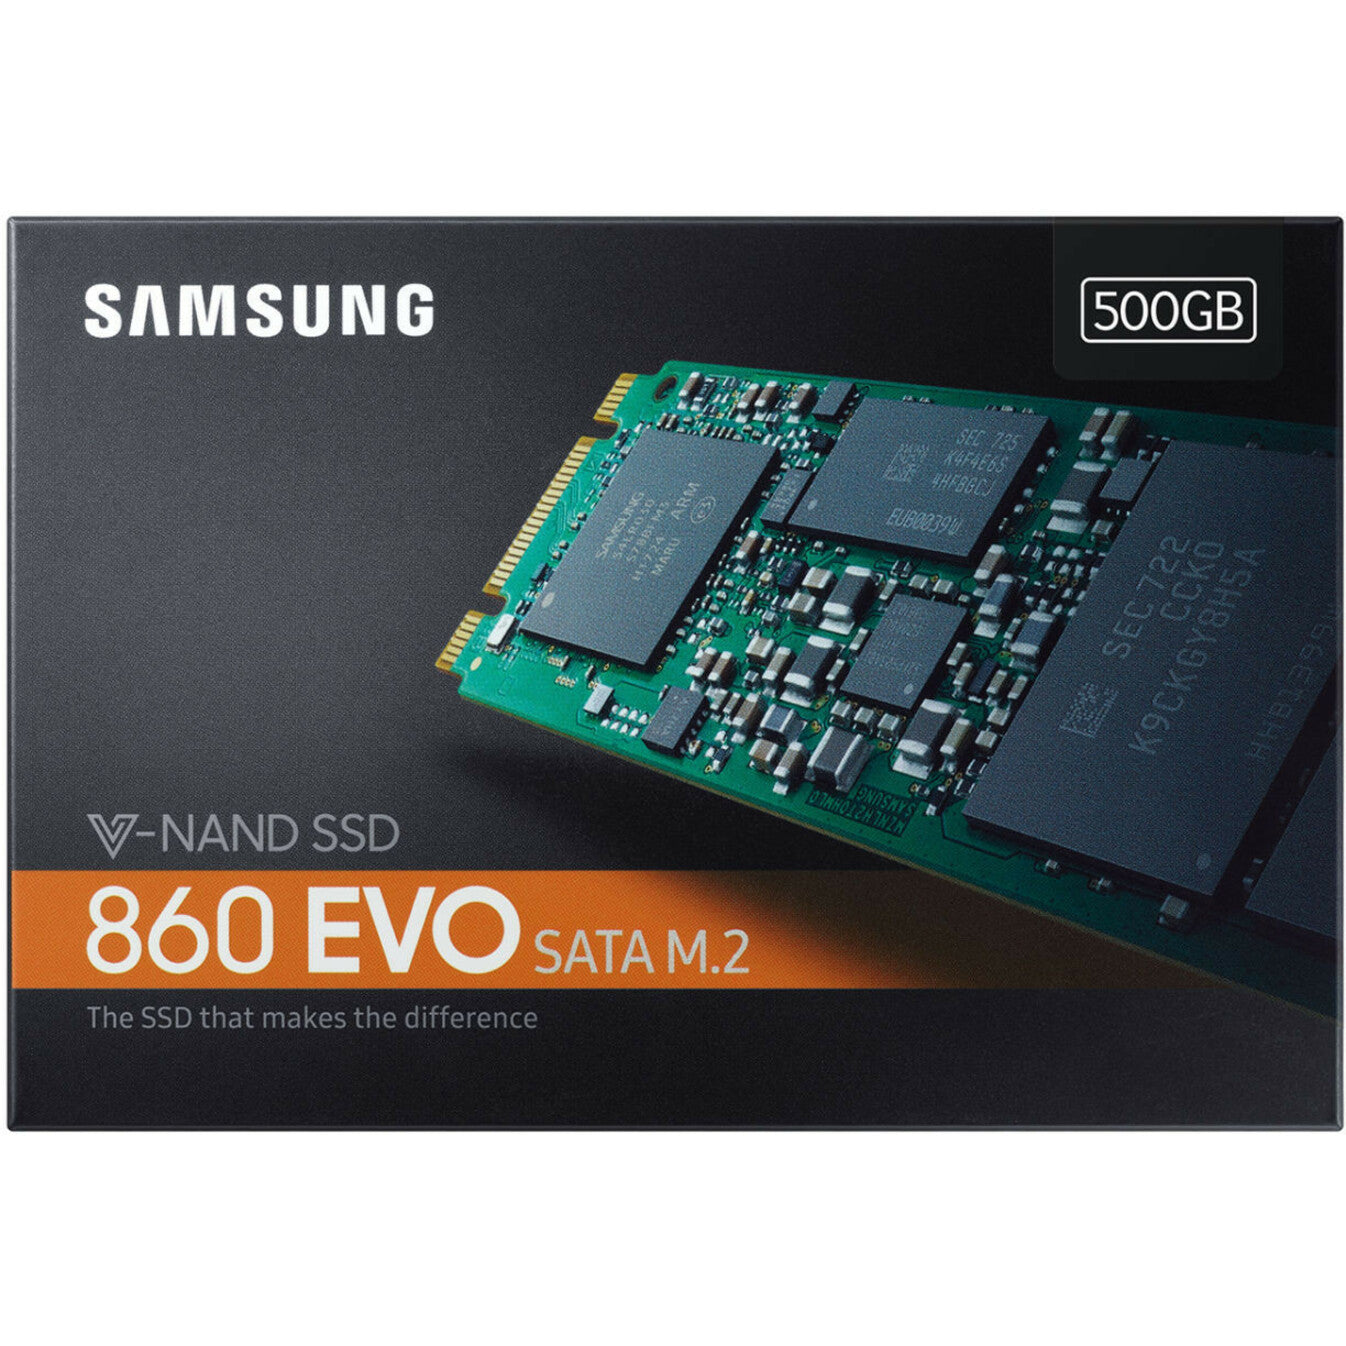 Samsung MZ-N6E500BW 860 EVO Solid State Drive, 500GB M.2 SATA/600, High-Speed Storage Solution